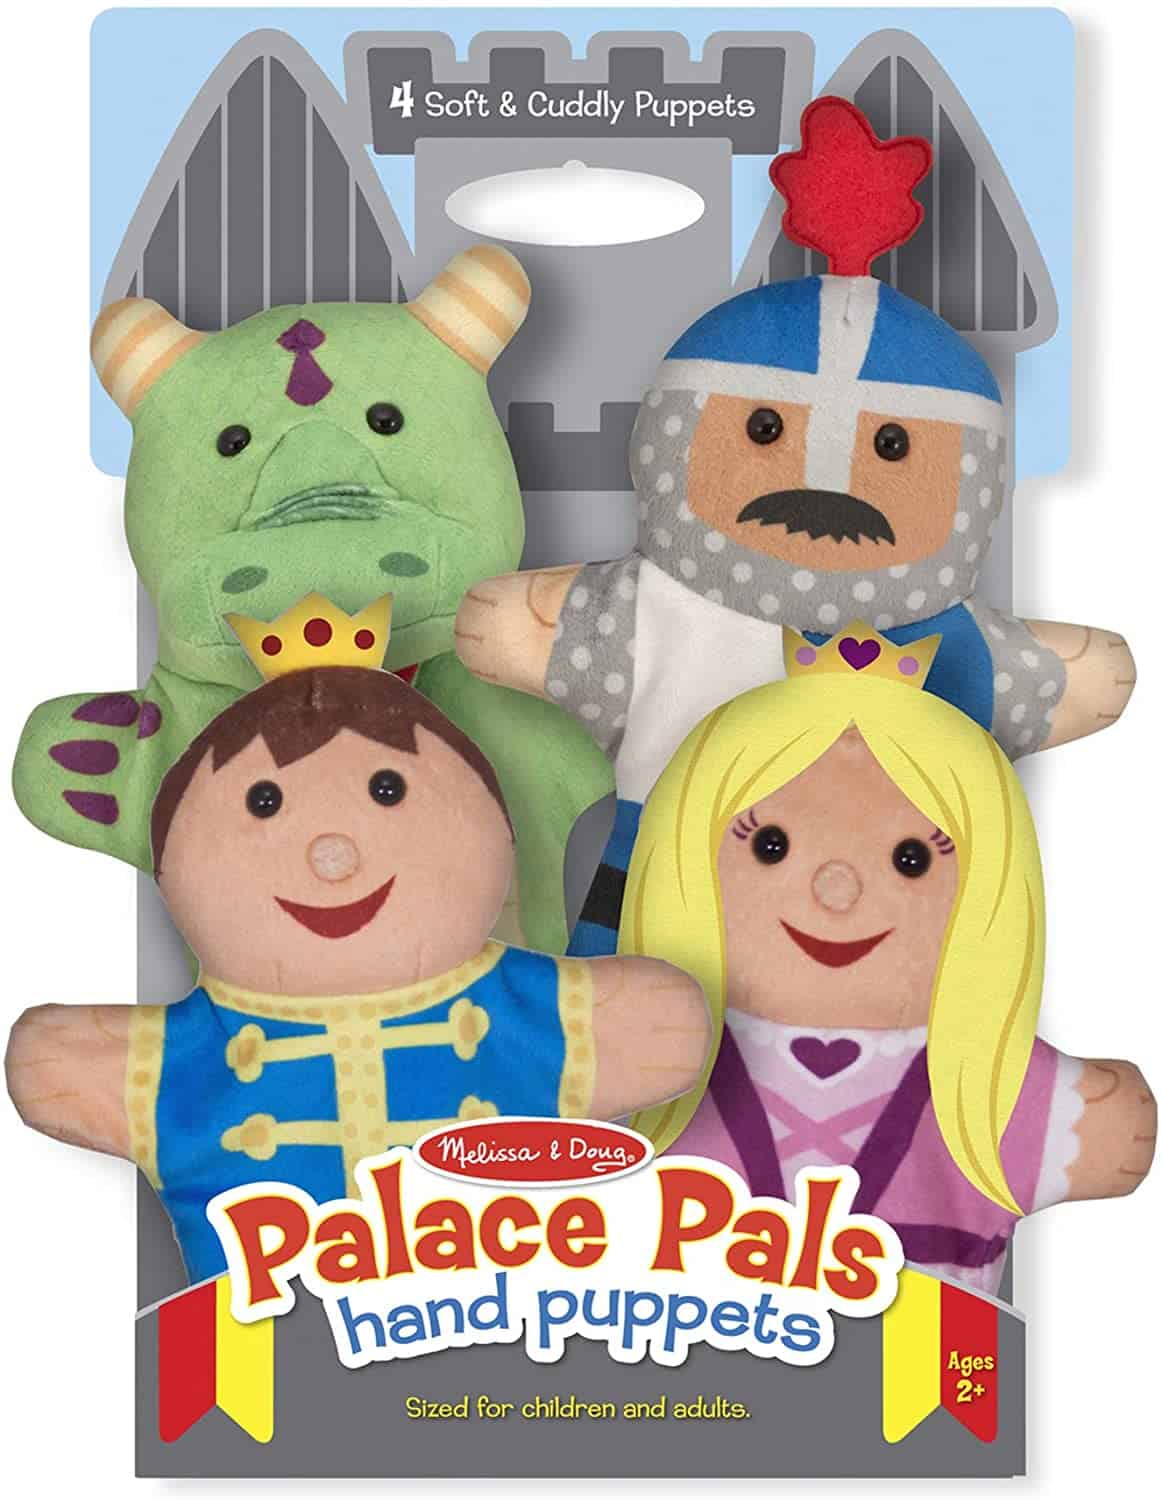 Mejor obra de simulación: Melissa & Doug Palace Pals Hand Puppets